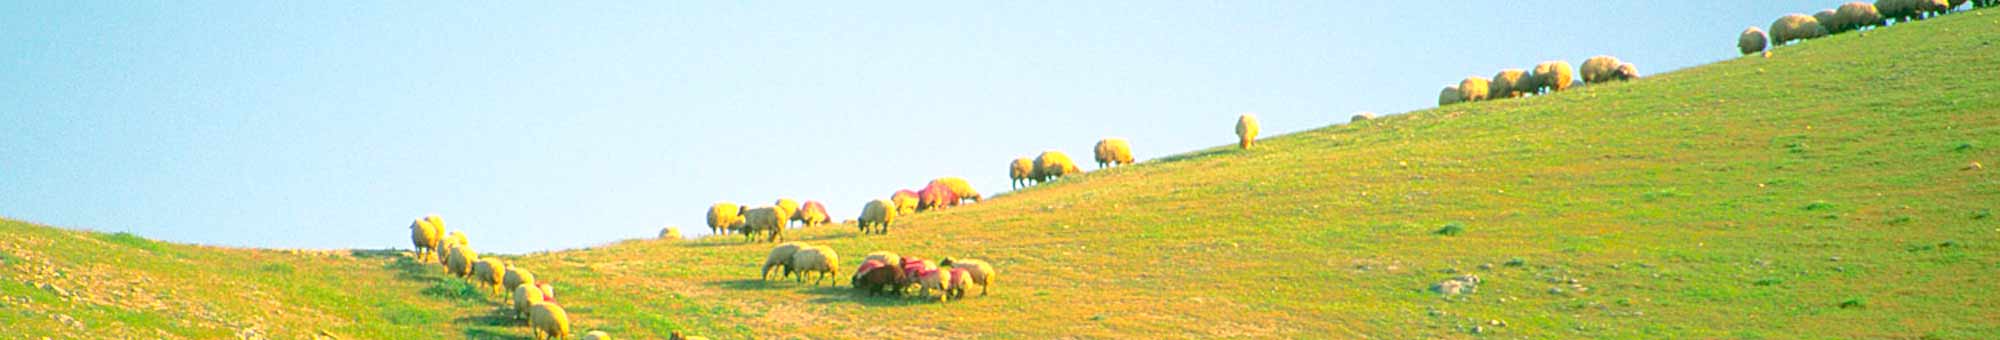 Sheep grazing on the Judean Hills